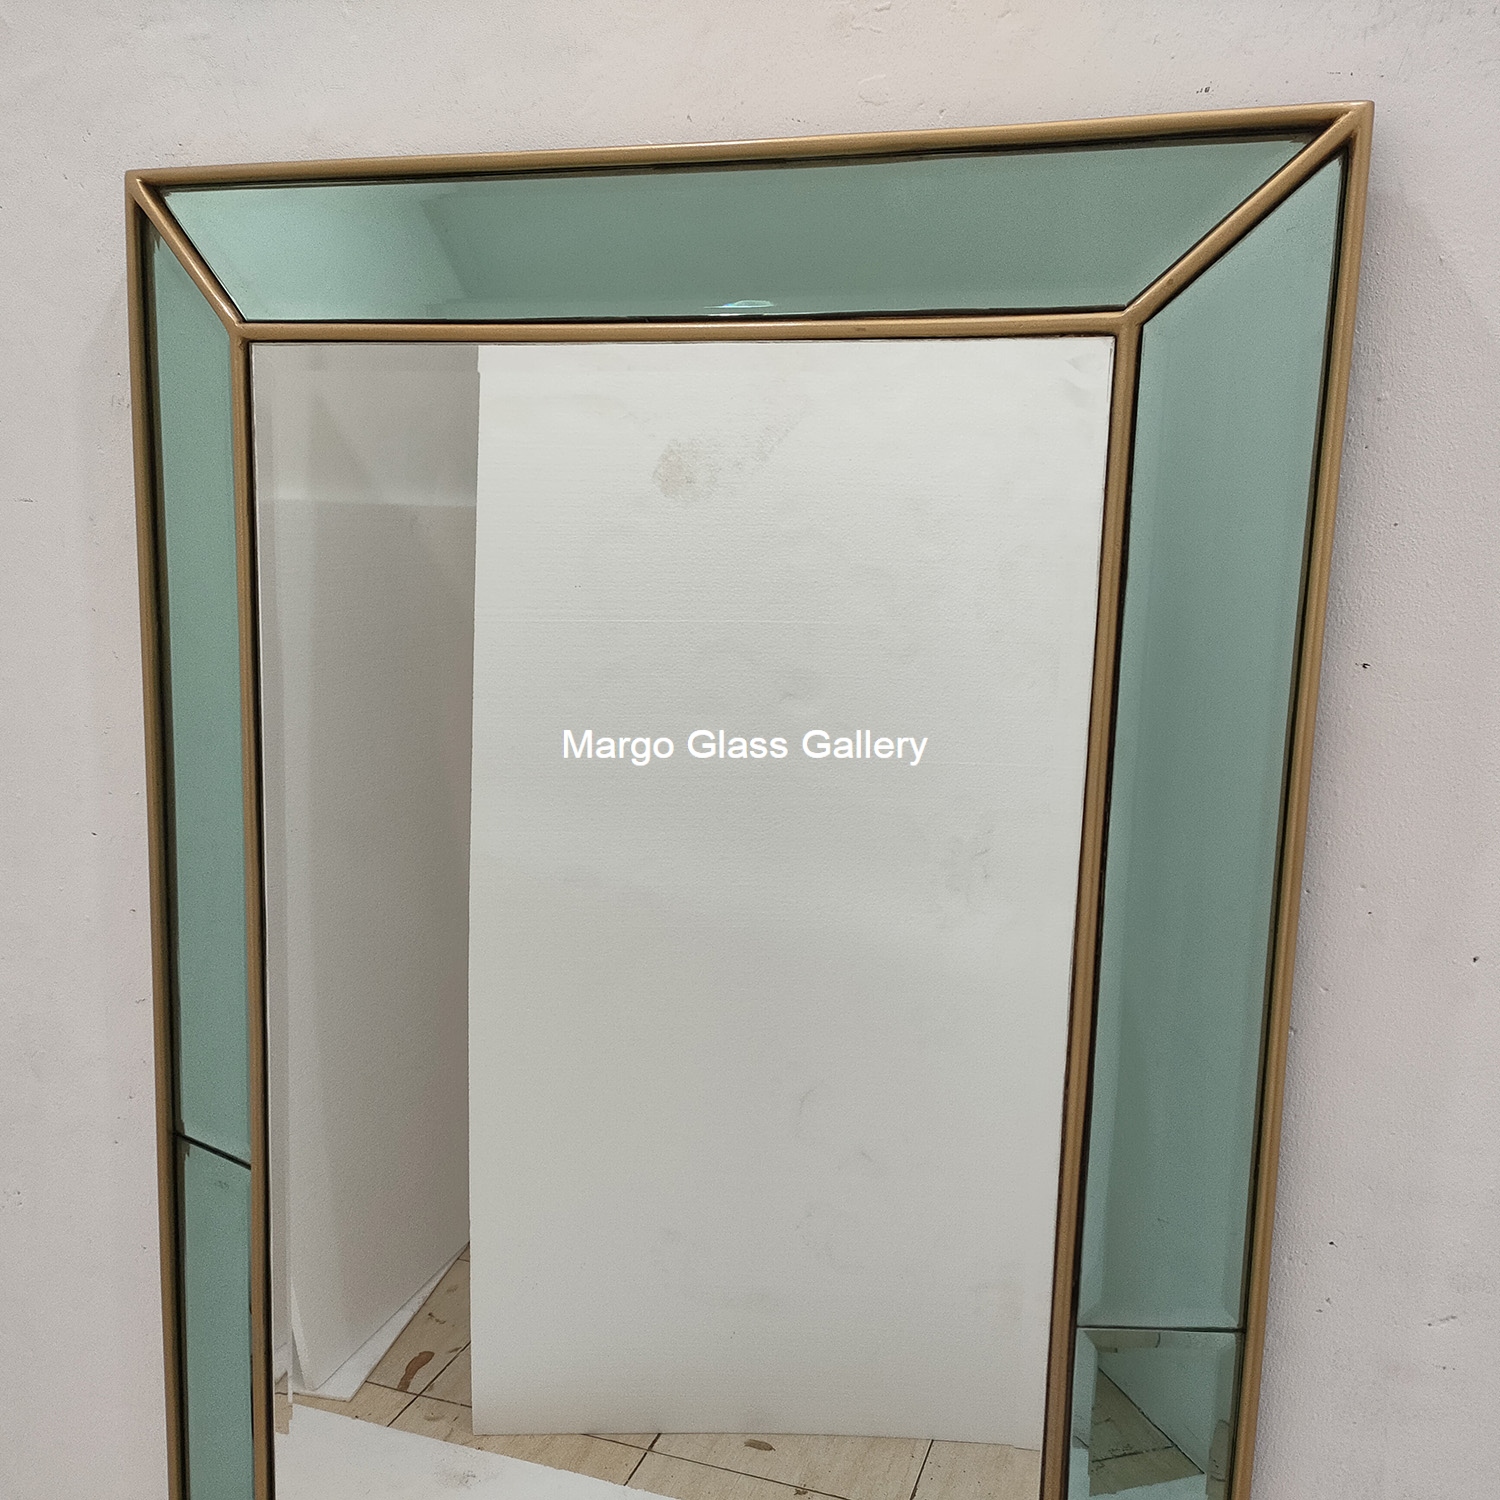 Rectangular Mirror Frame Green MG 004716